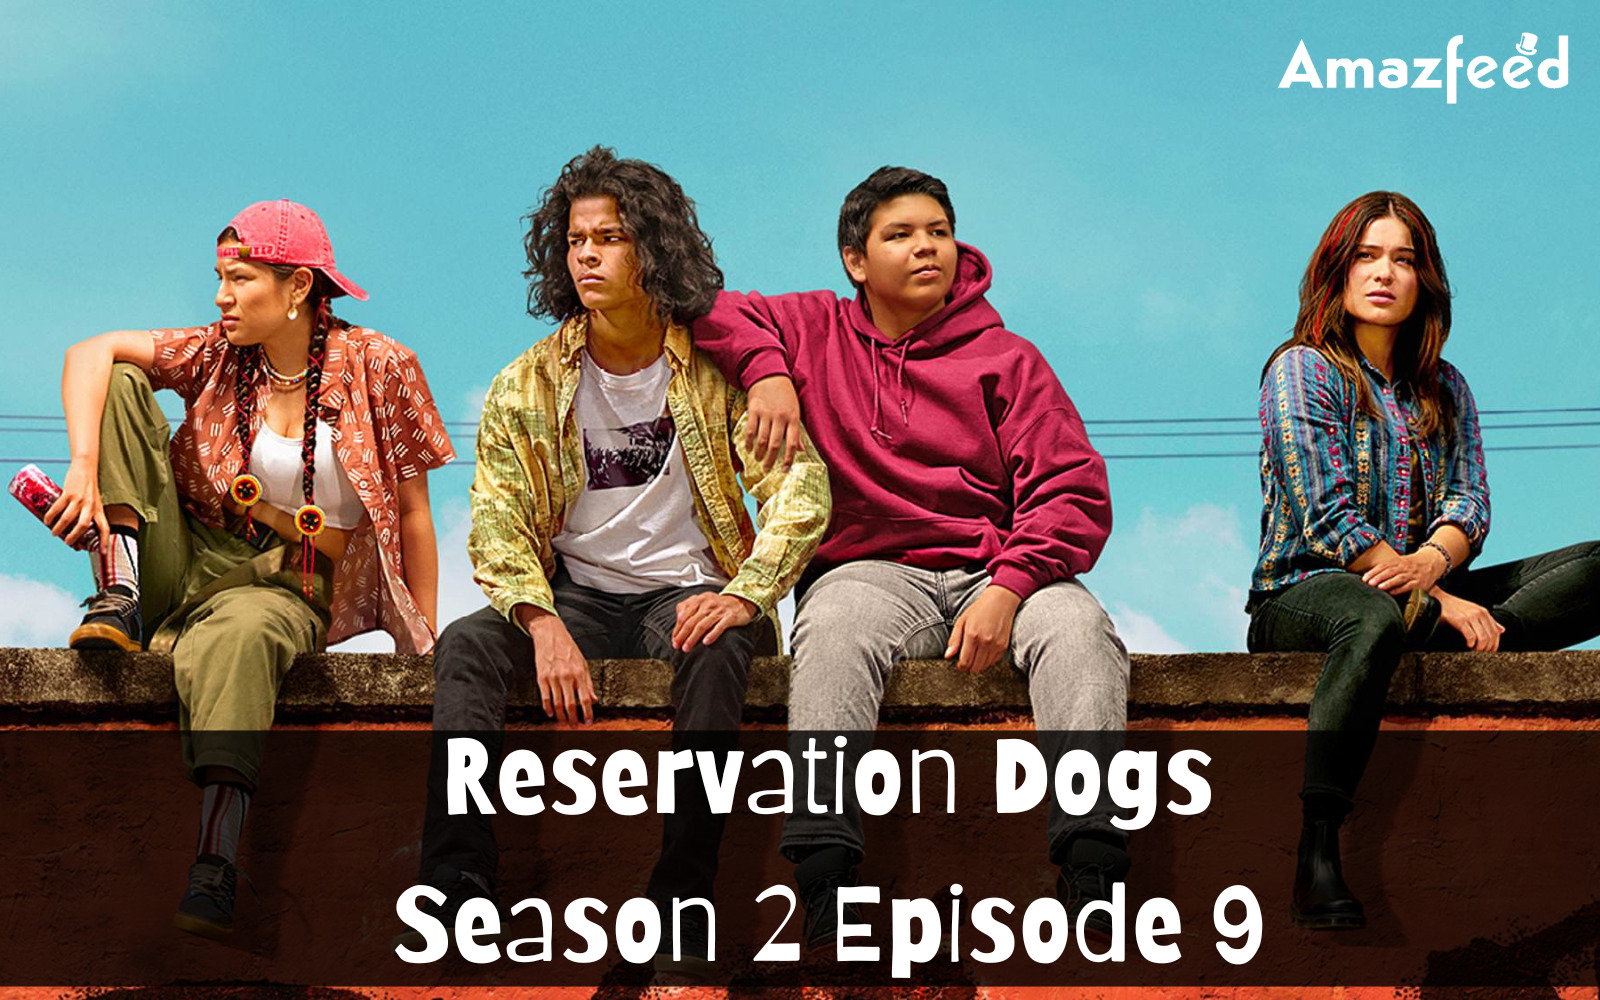 Reservation Dogs Season 2 Episode 9 spoiler